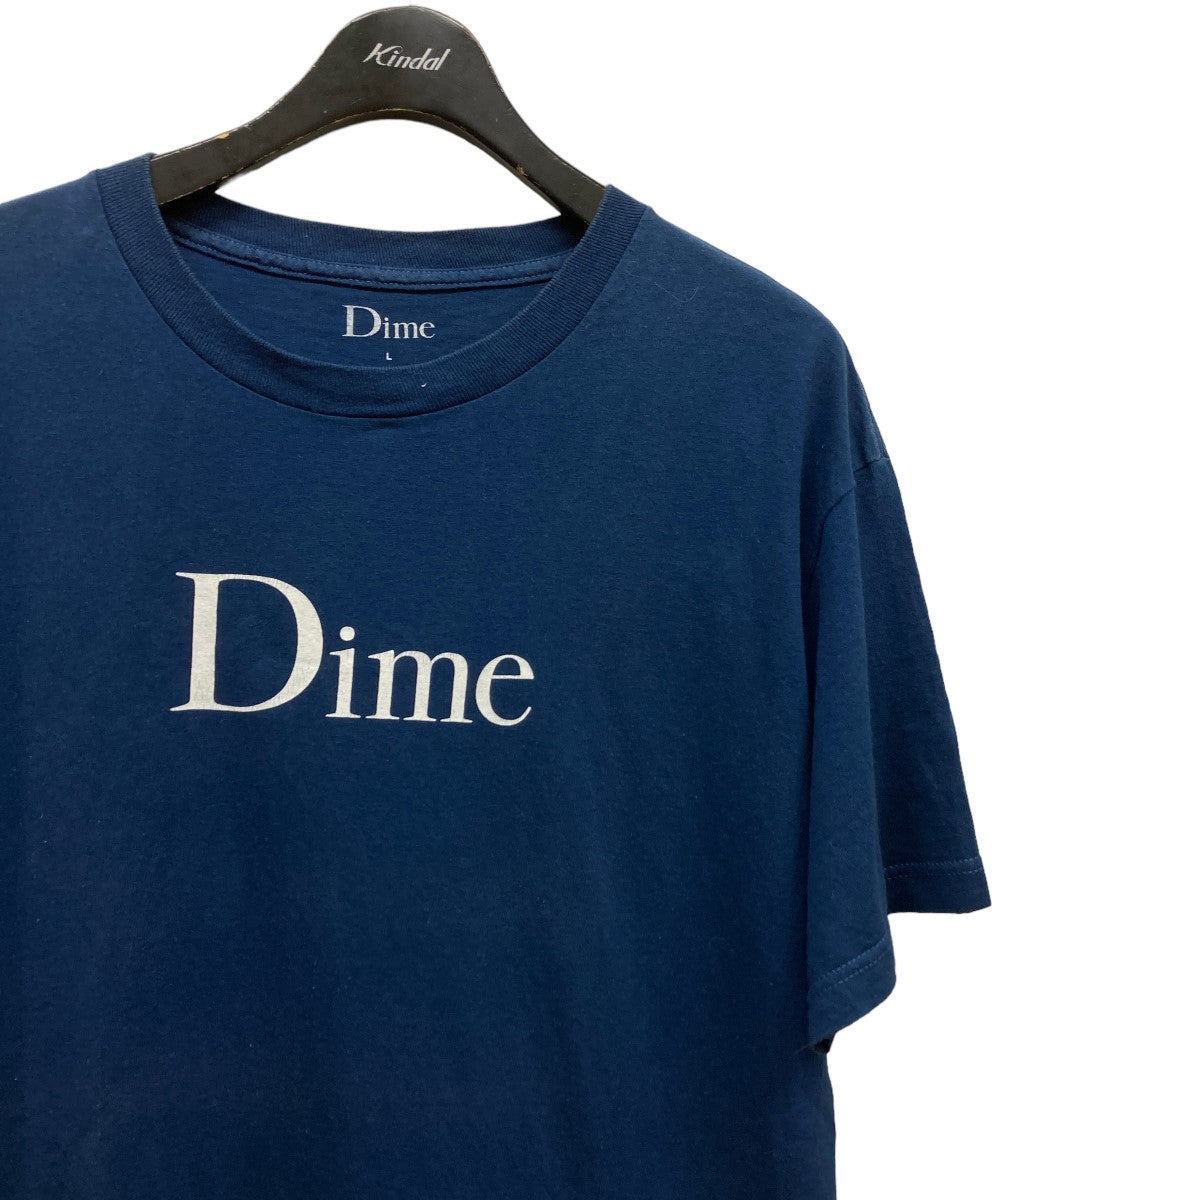 Dime(ダイム) ロゴプリントTシャツ